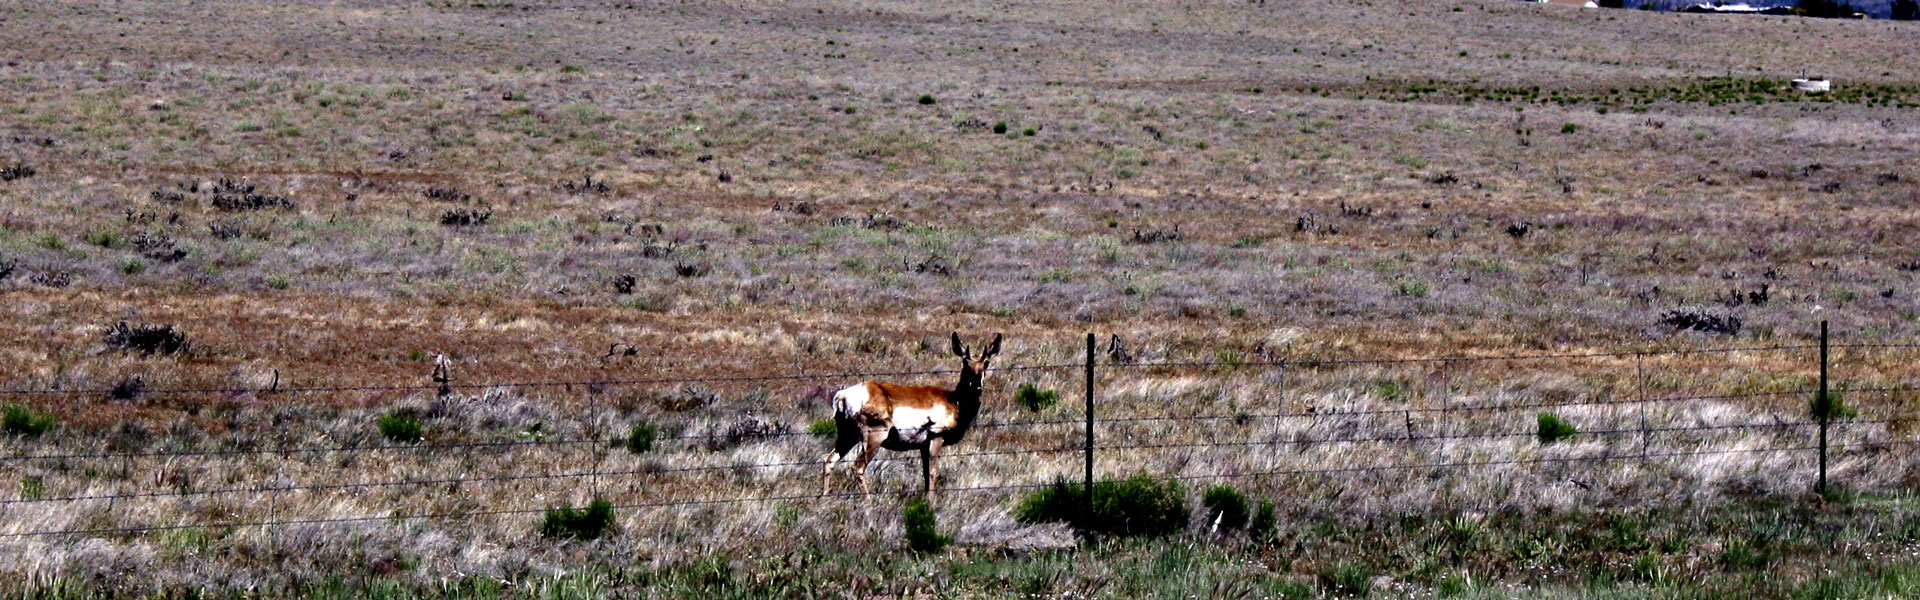 Pronghorn behind fence